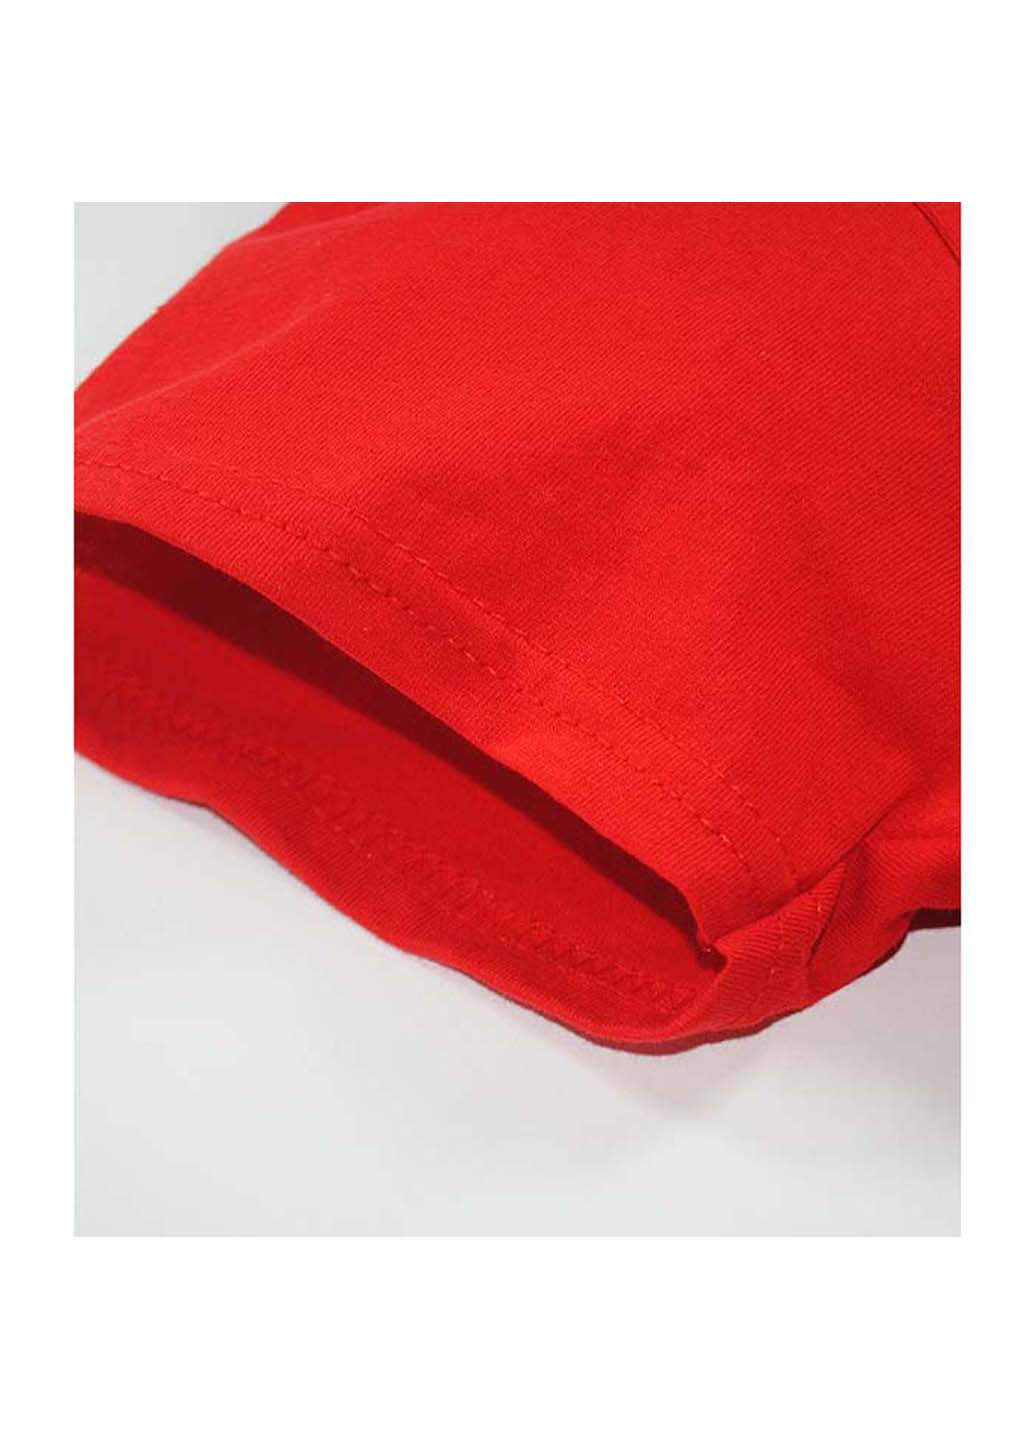 Красная демисезон футболка Fruit of the Loom 061398040XXL